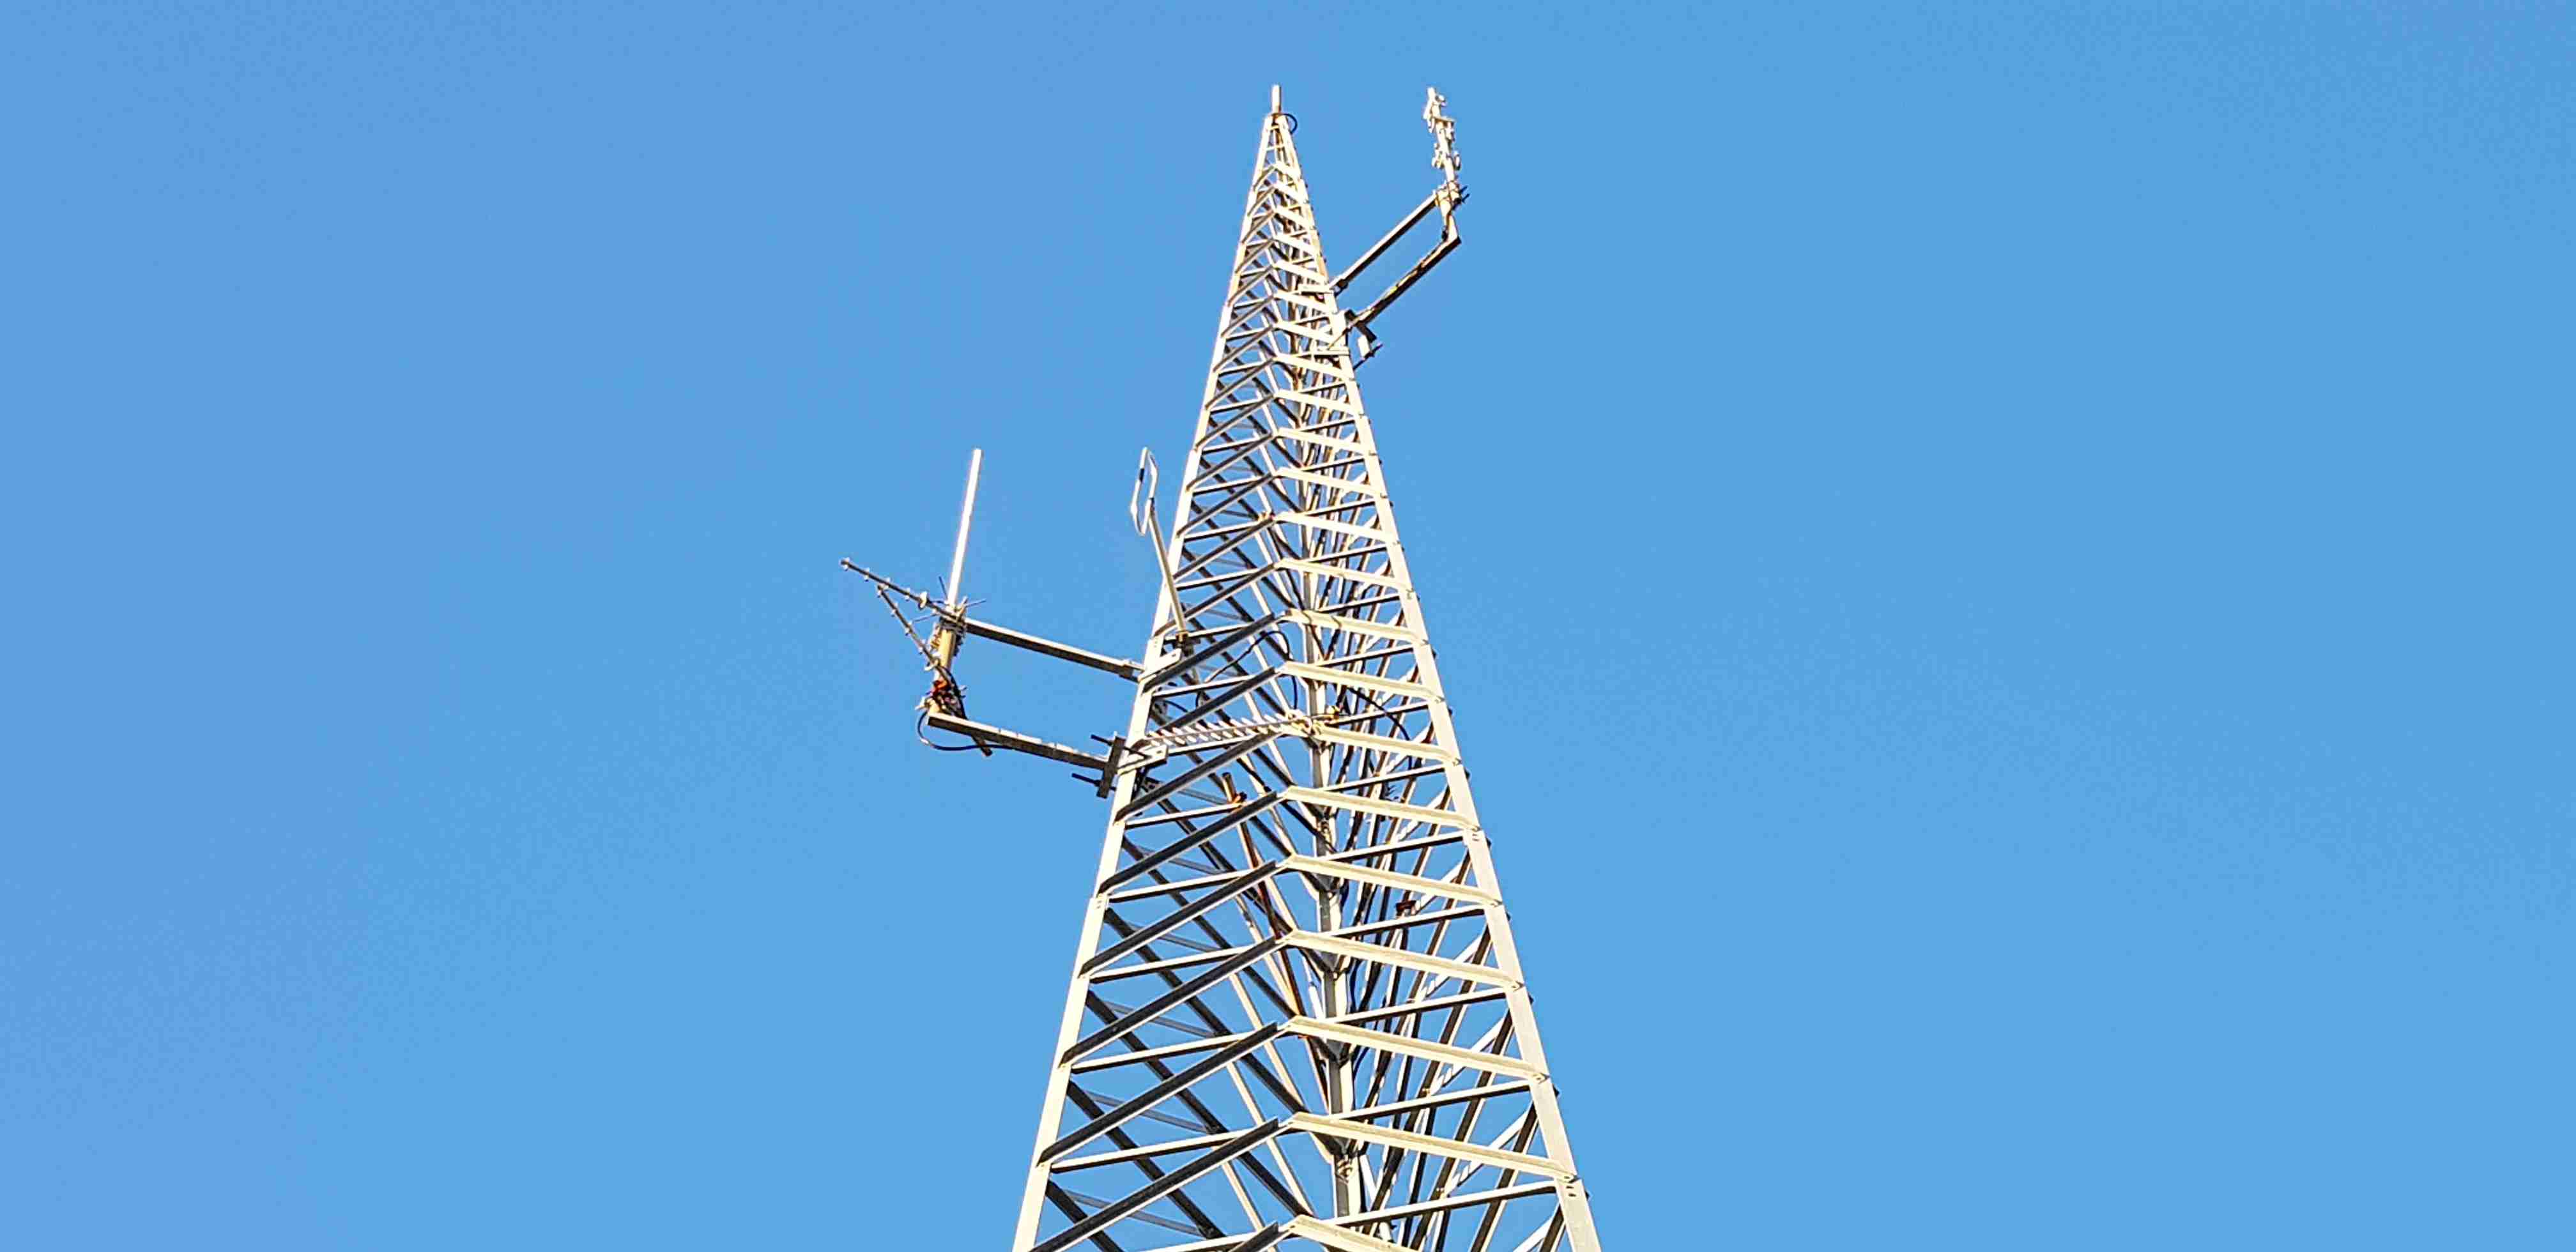 Antennas-2018-08-03-16.43.16